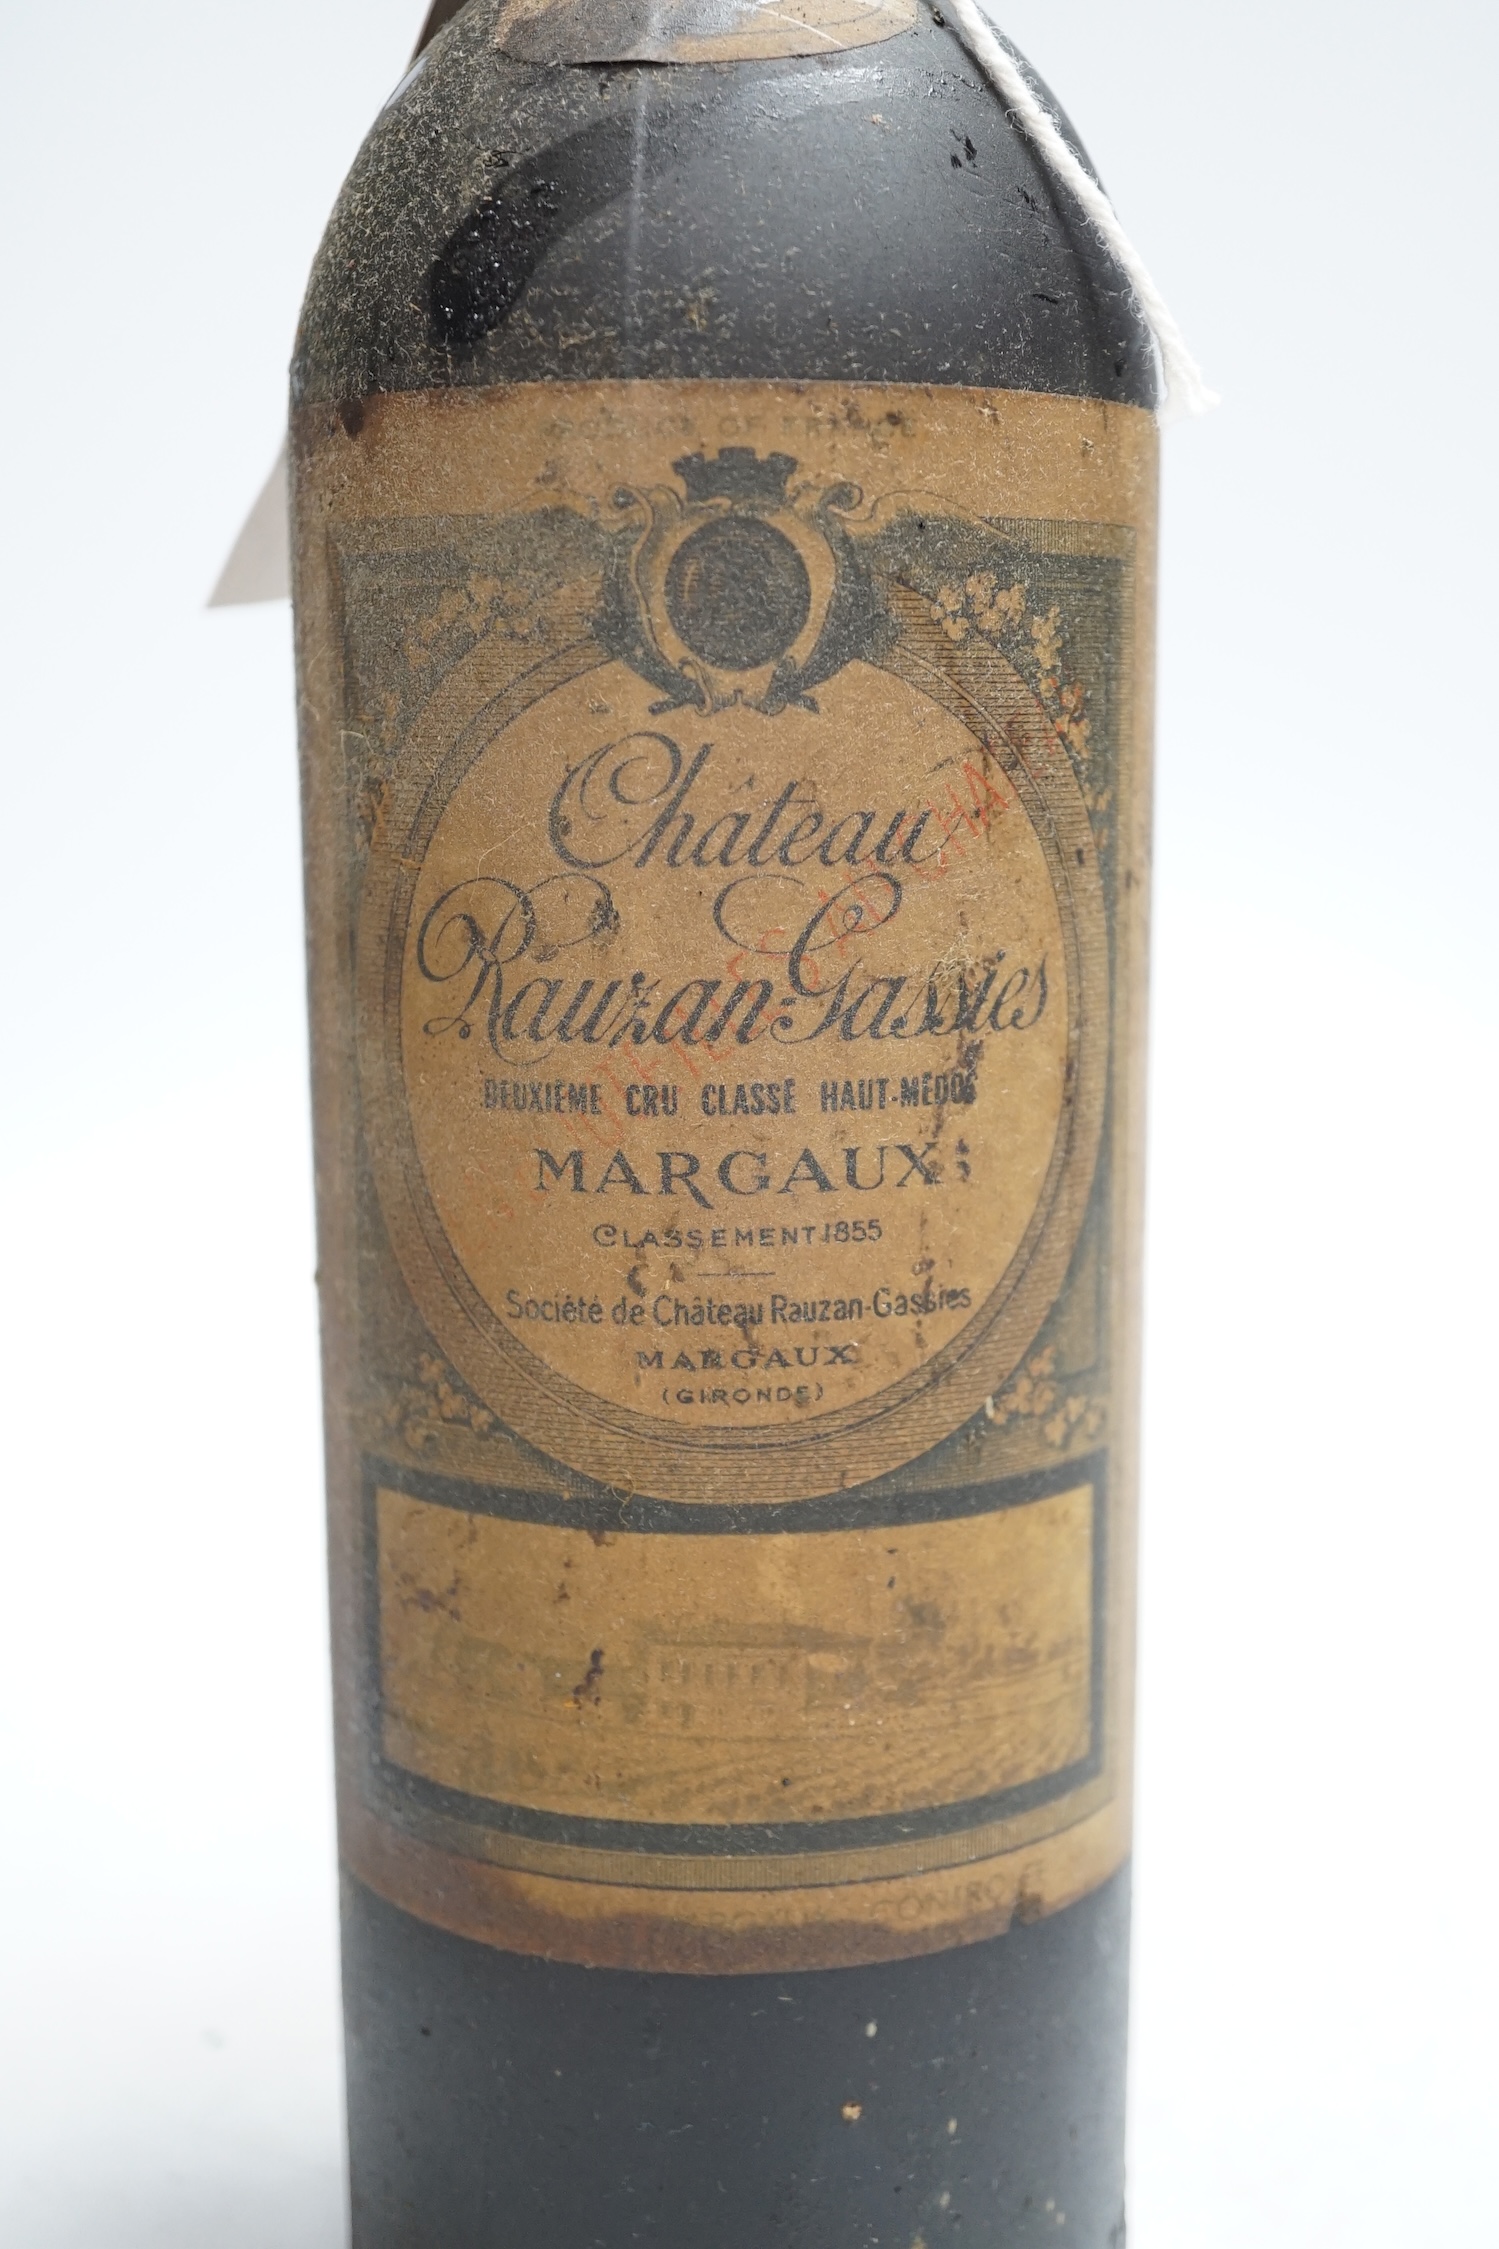 One bottle of Chateau Rauzan Gassies Margaux - Image 2 of 3